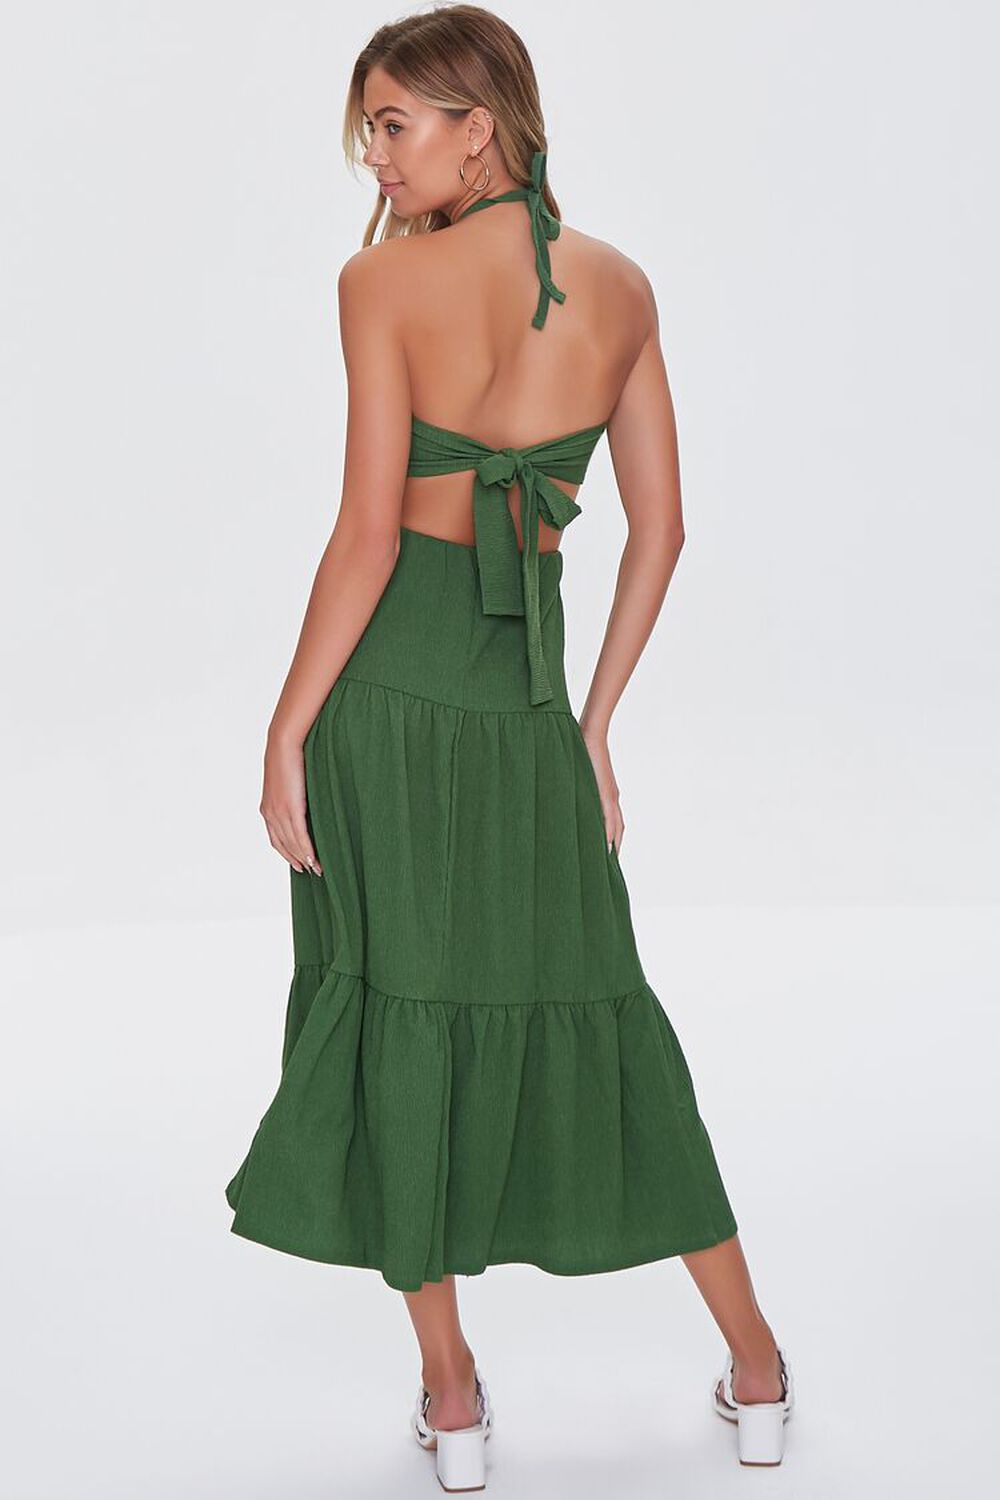 GREEN Crop Top & Tiered Midi Skirt Set, image 3